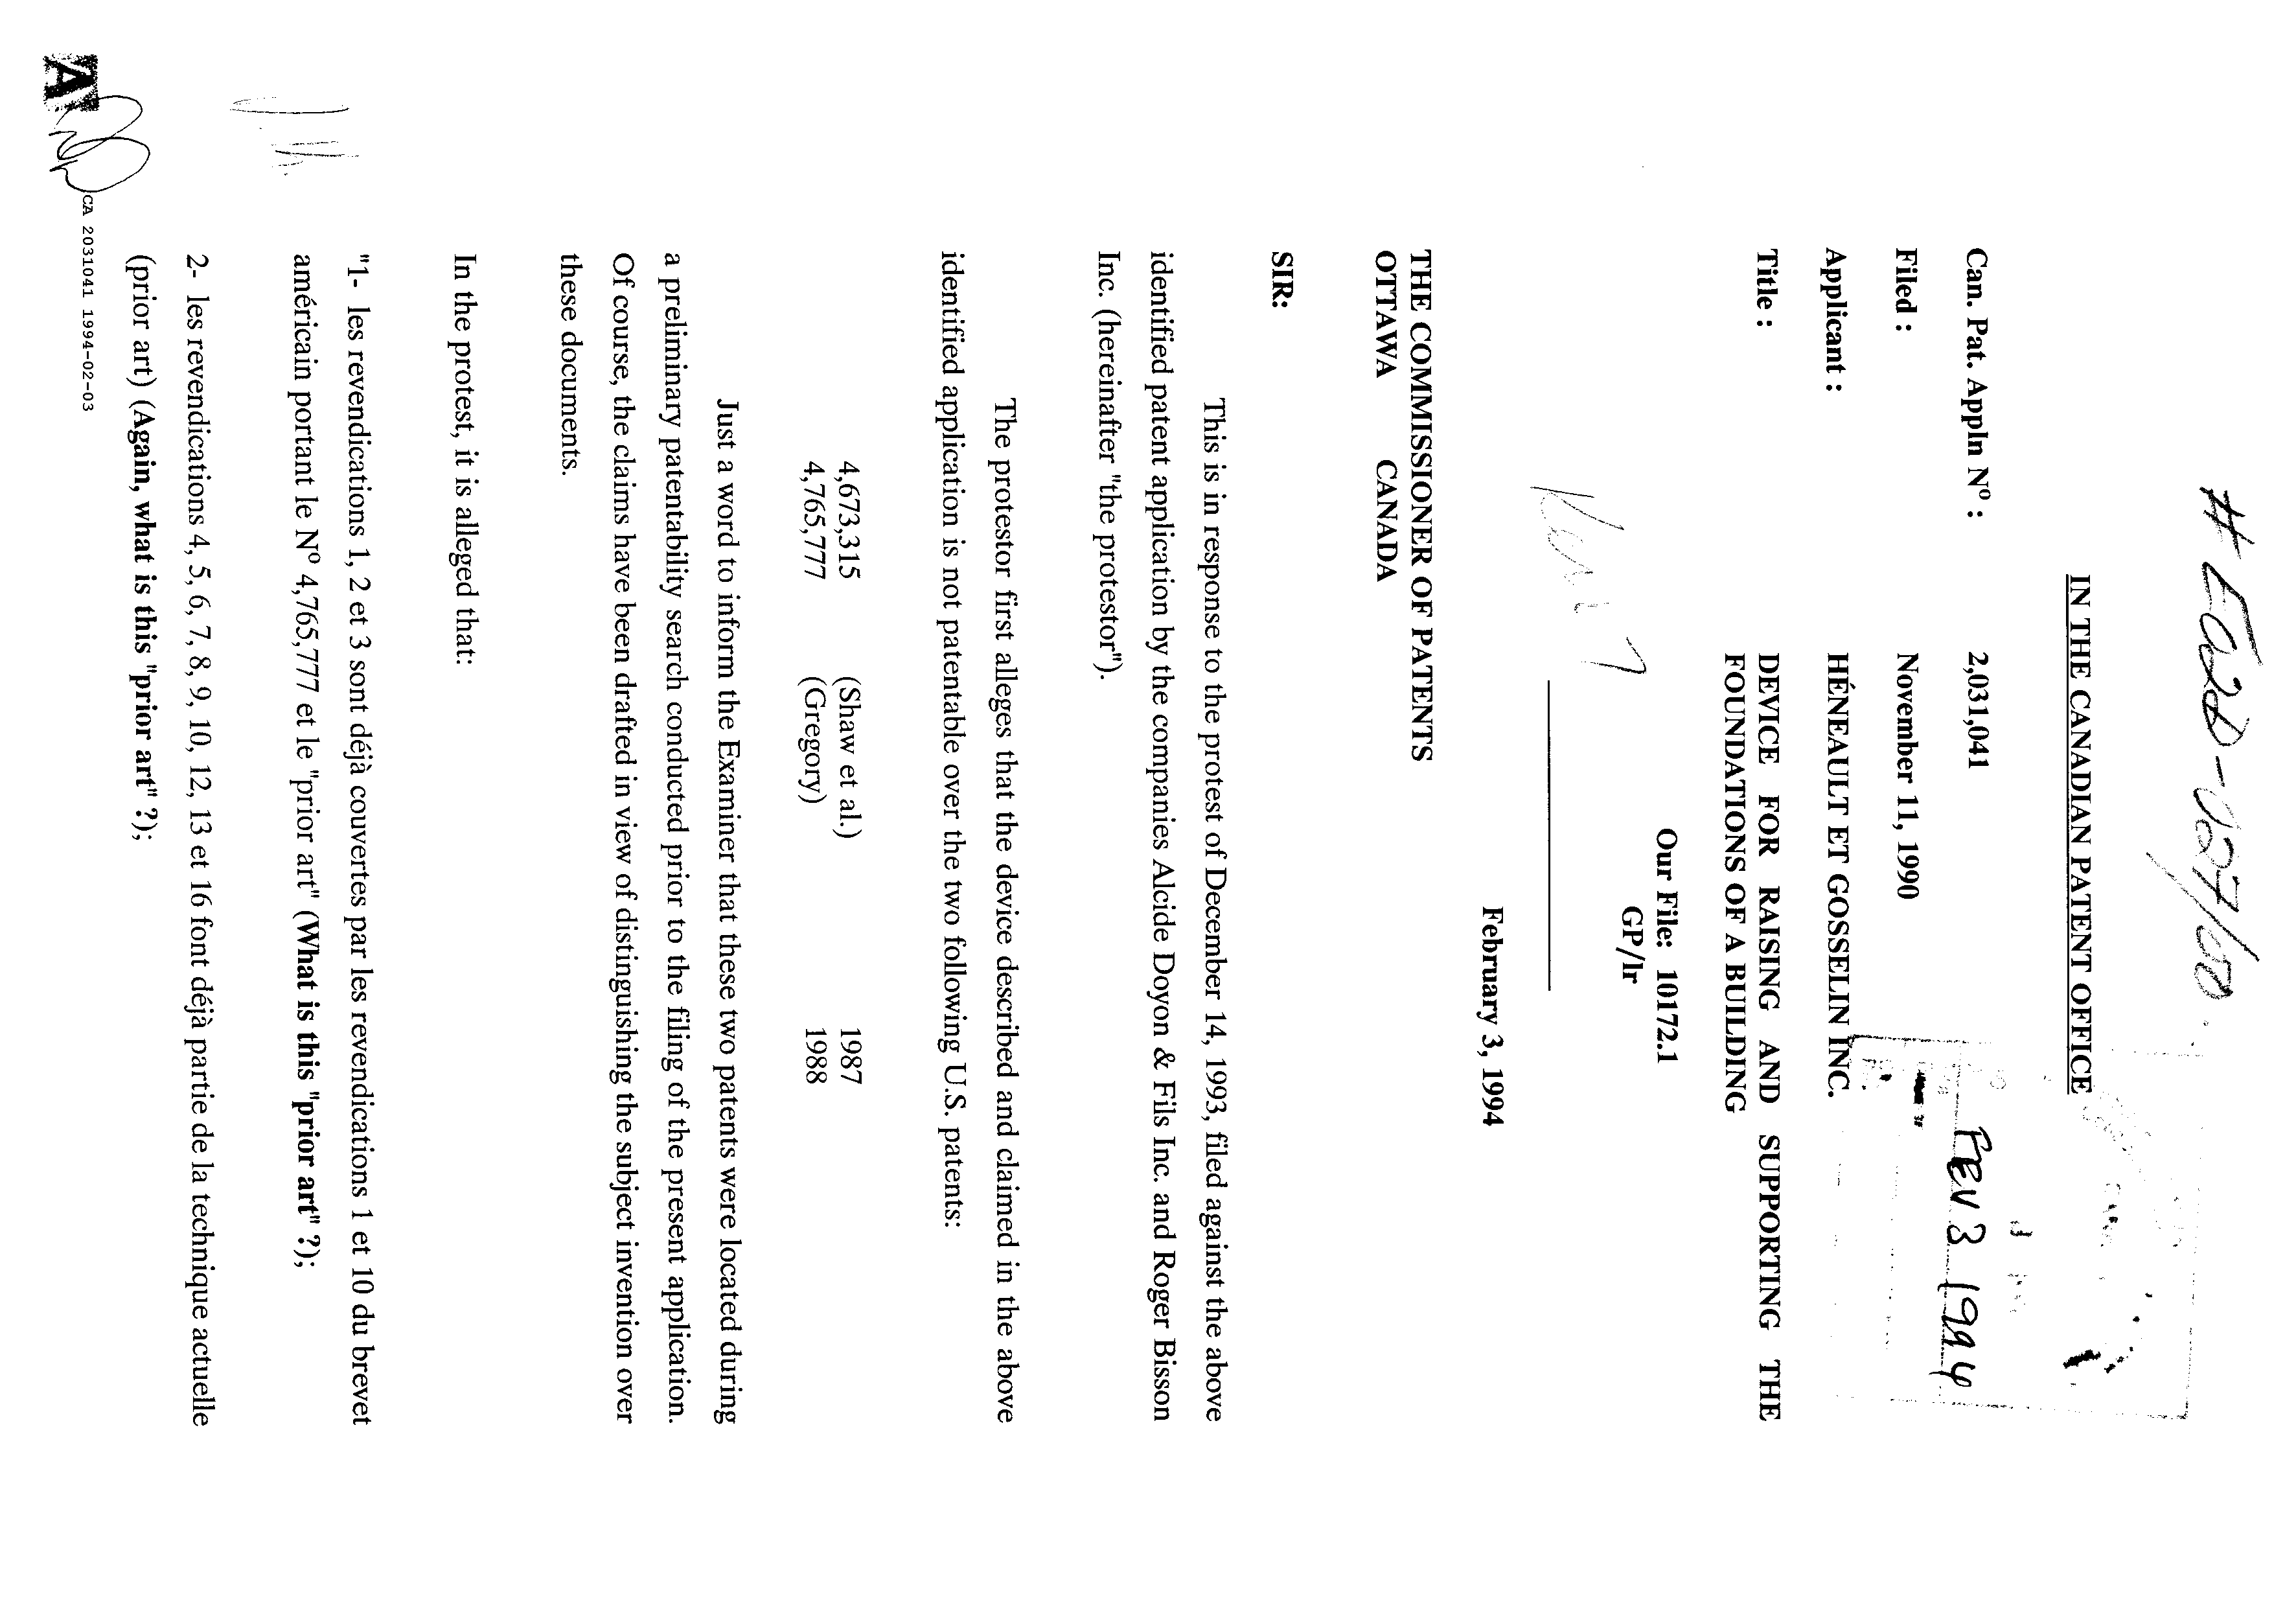 Canadian Patent Document 2031041. Prosecution-Amendment 19931203. Image 1 of 3